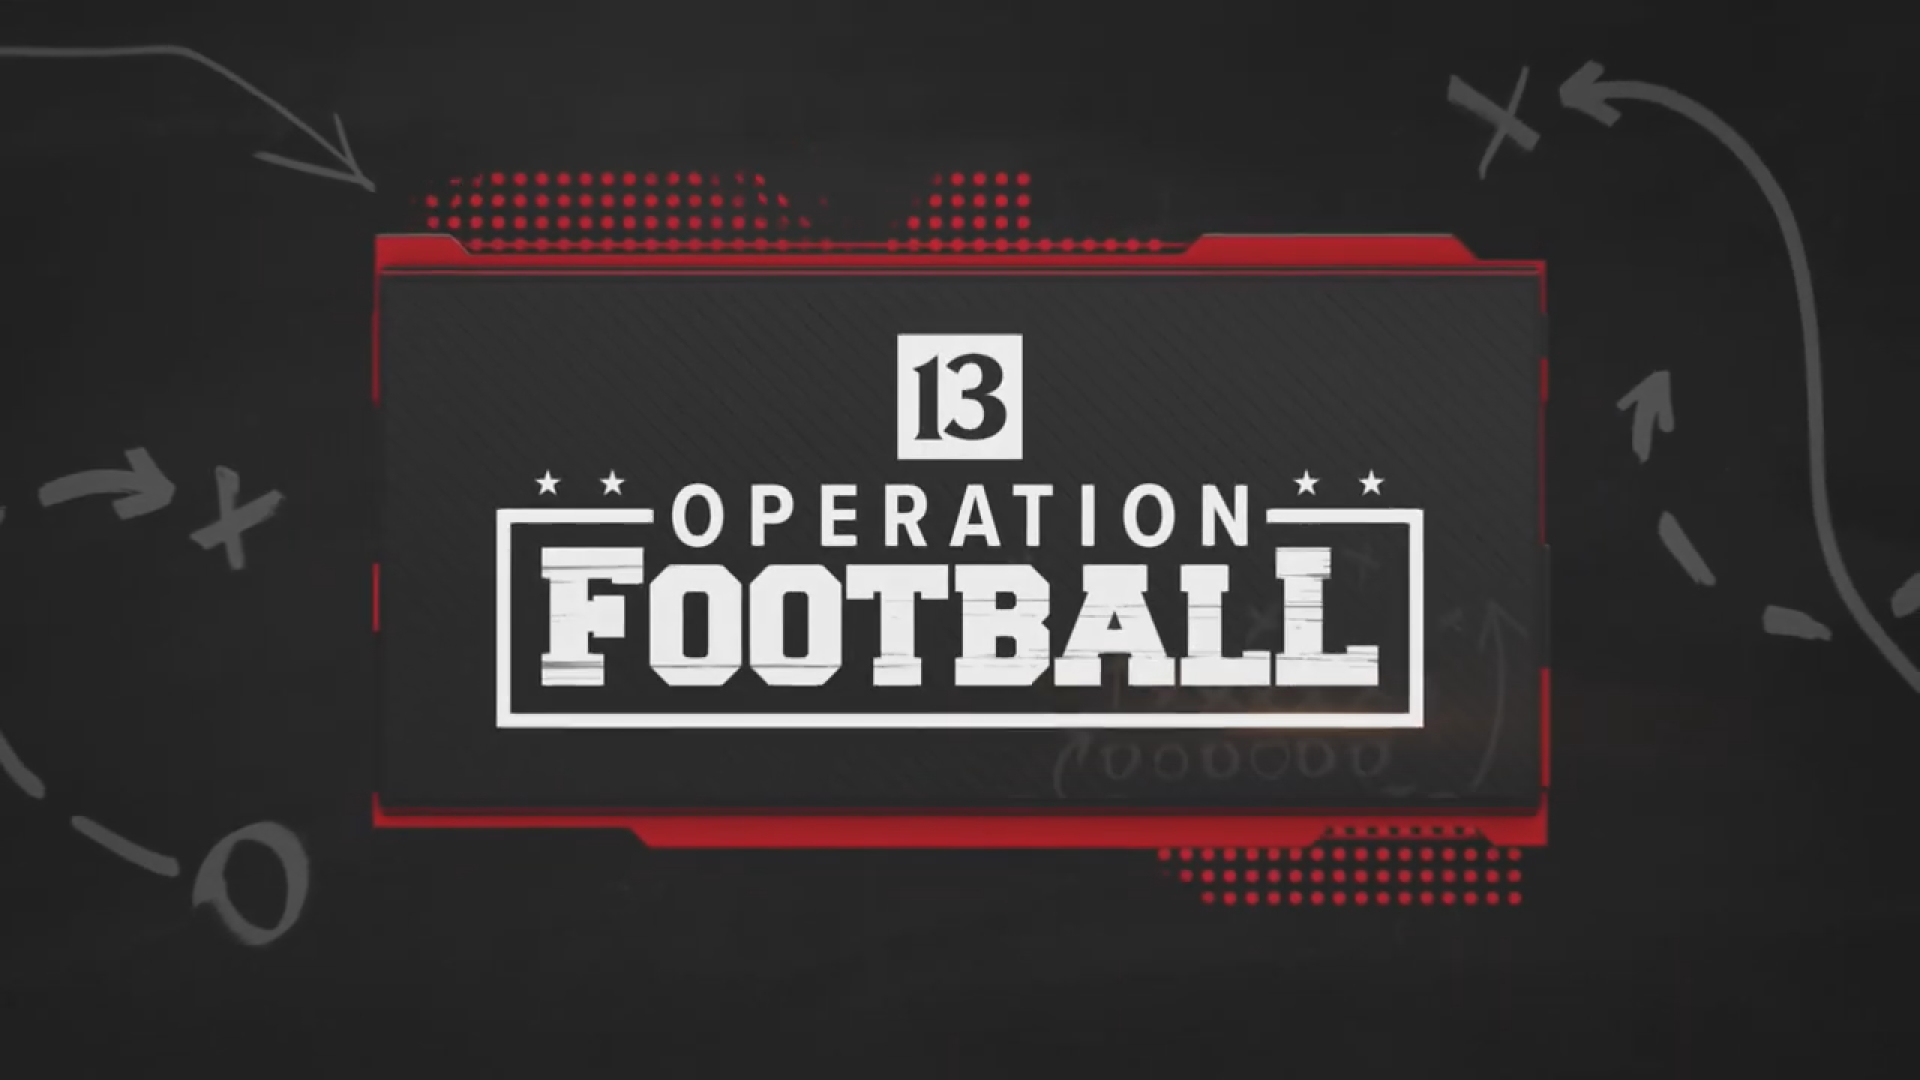 We recap the Sectional semis in this week's Operation Football recap!